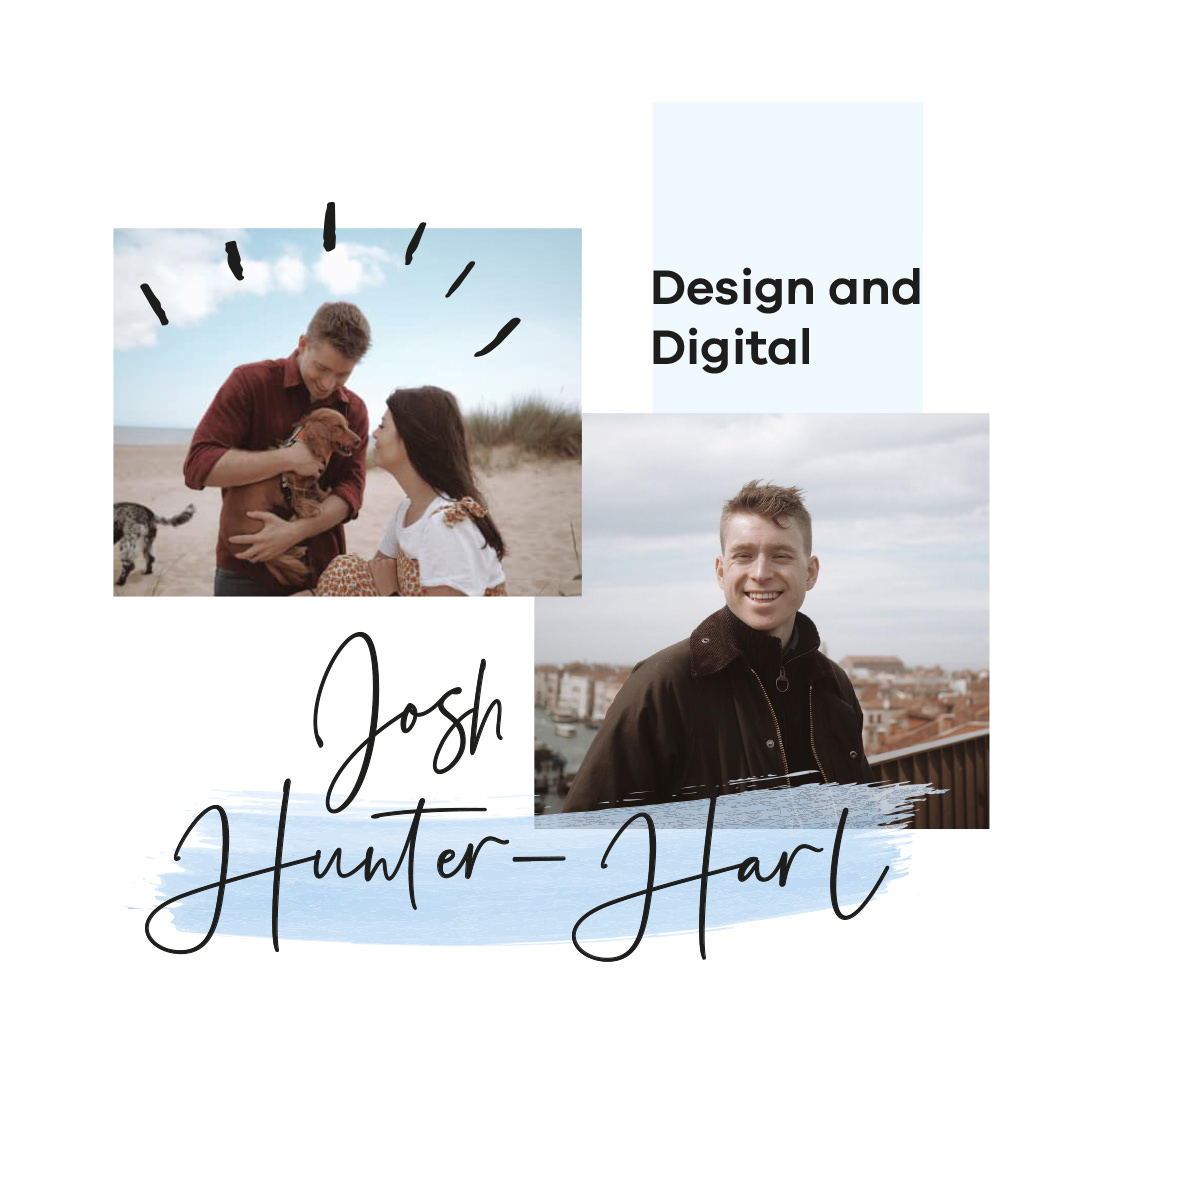 Joshua Hunter-Harl - Head of Design and Digital